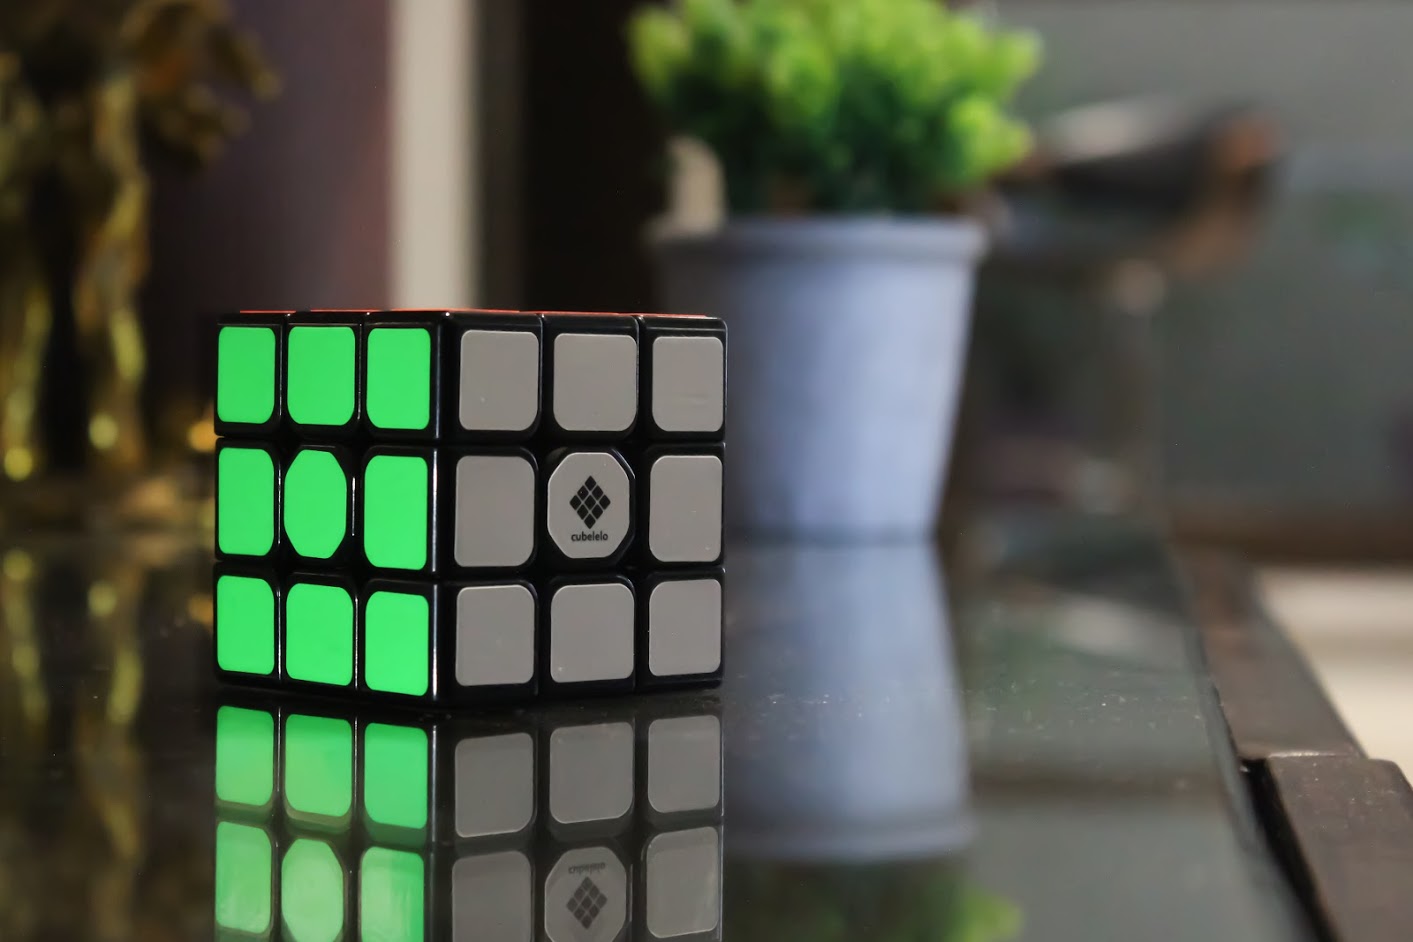 Rubicks Cube 3x3 Free Shipping  Rubix Cube 3x3 Speed Cube - Qiyi